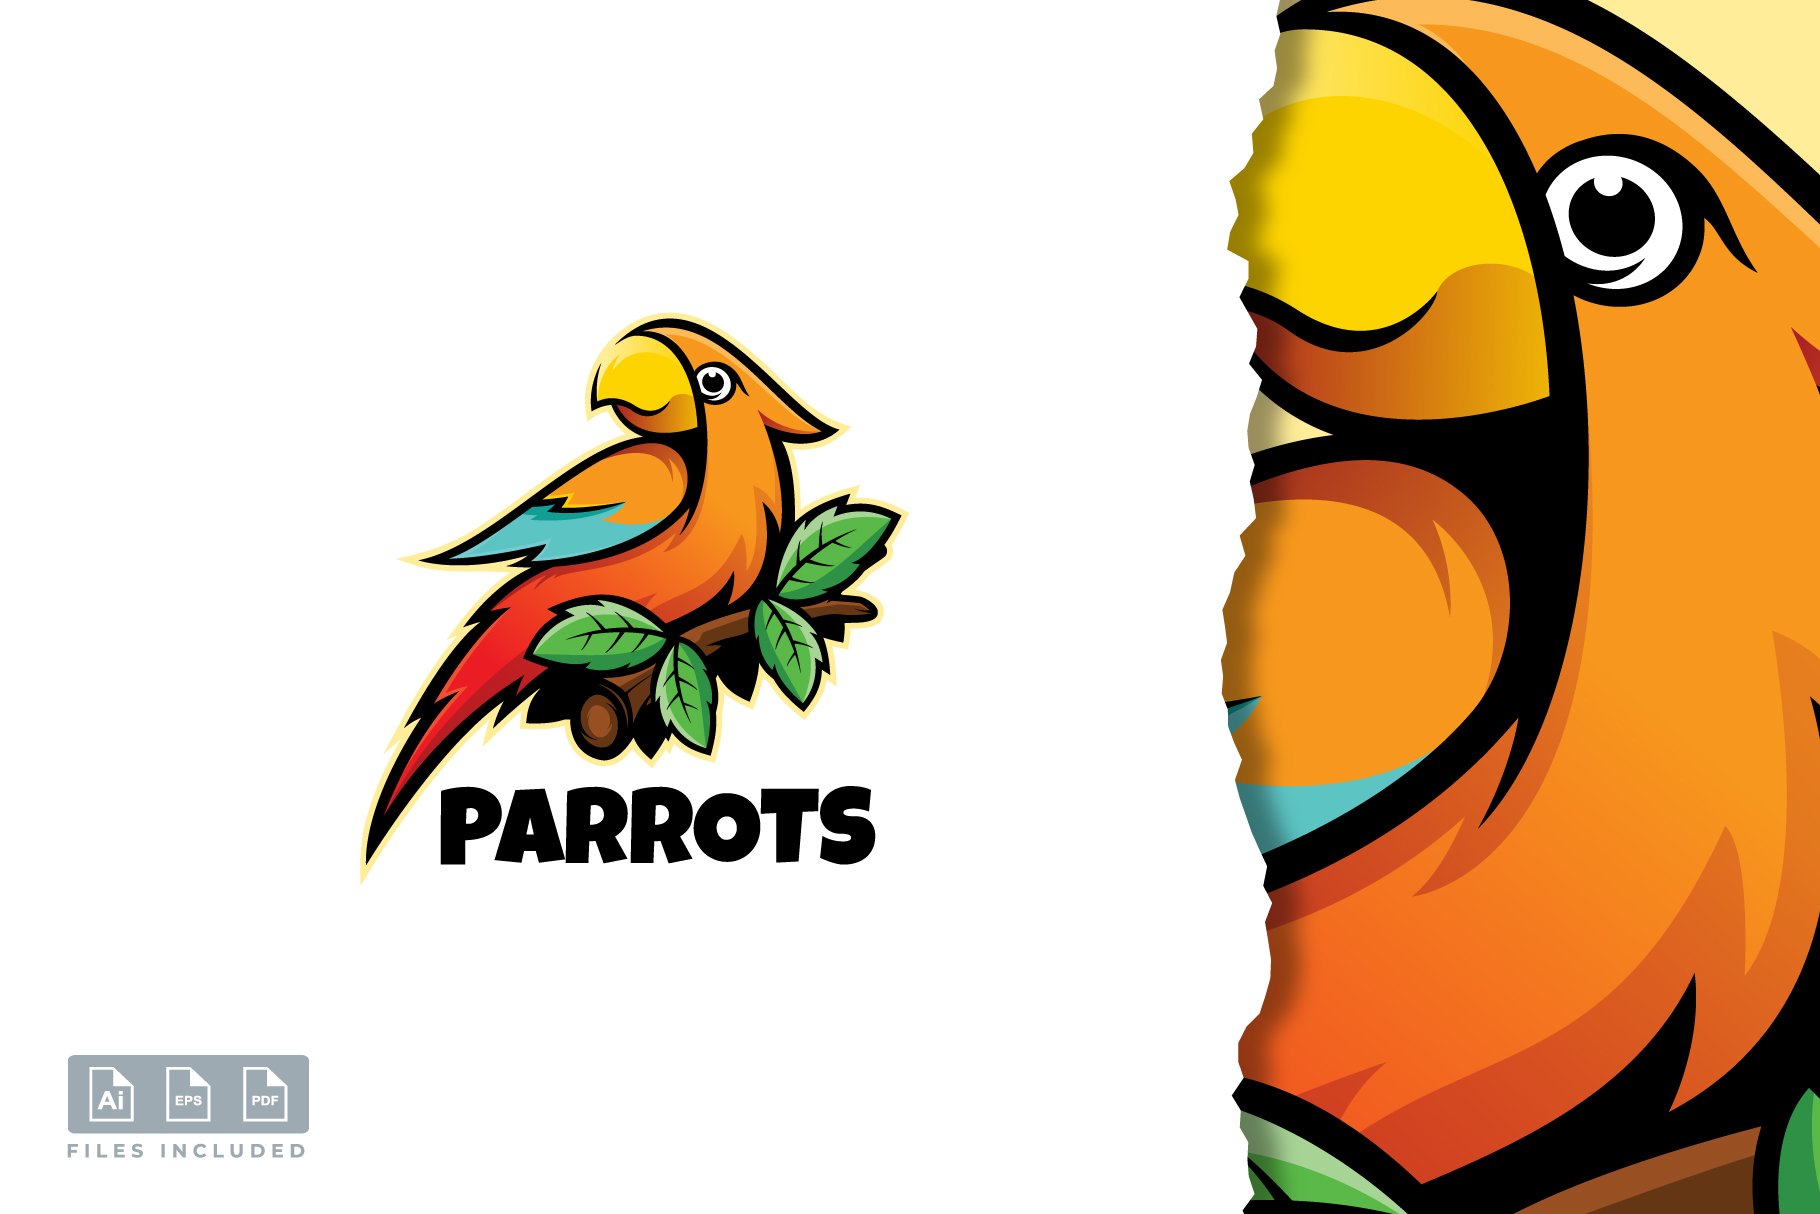 Parrot logo design cover image.